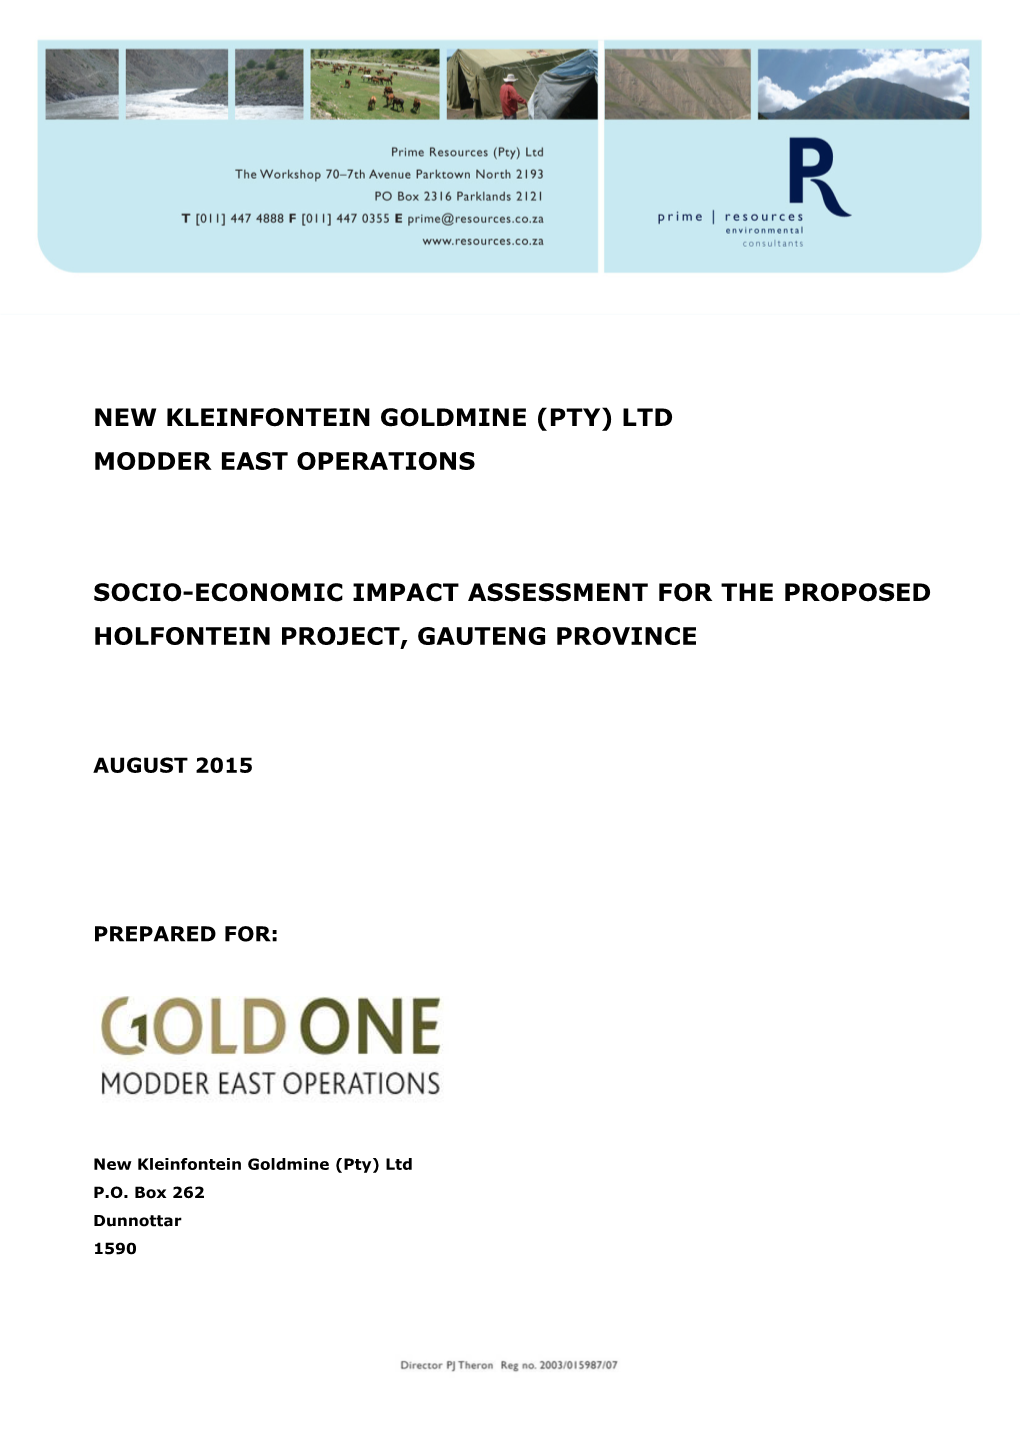 New Kleinfontein Goldmine (Pty) Ltd Modder East Operations